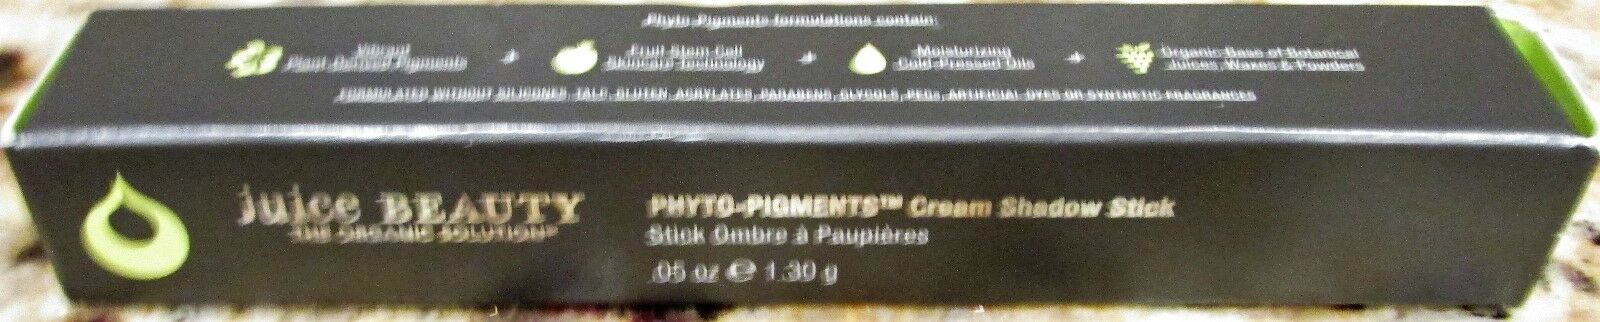 Juice Beauty Phyto-Pigments Cream Shadow Stick - 18 Fog